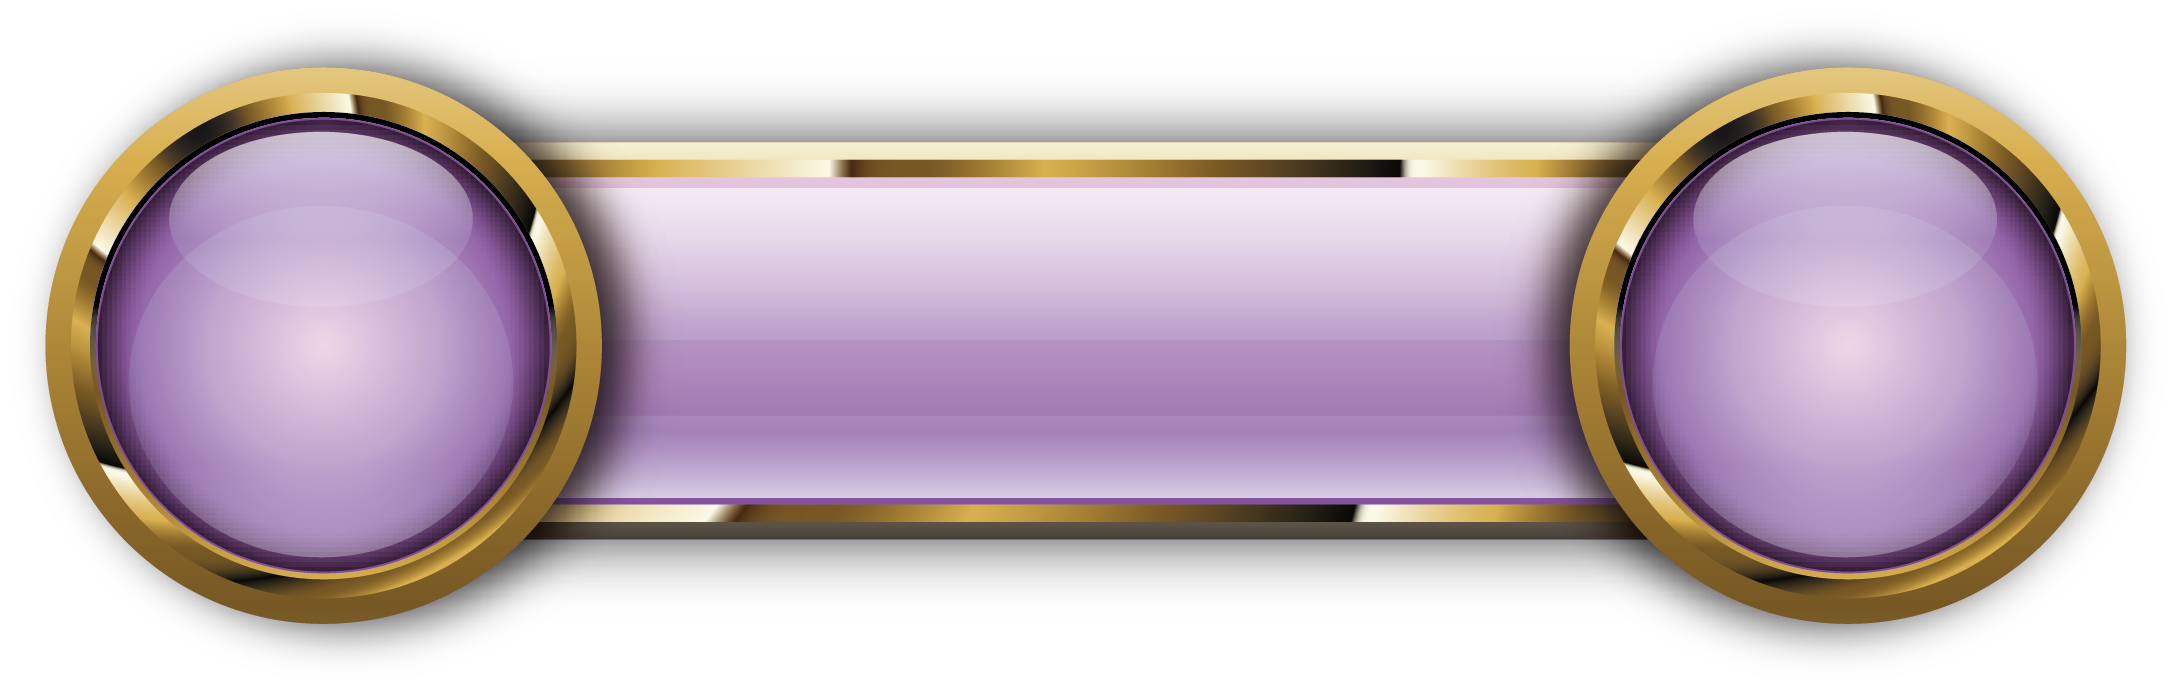 Quartz Purple Button Material Crystal Vector Clipart